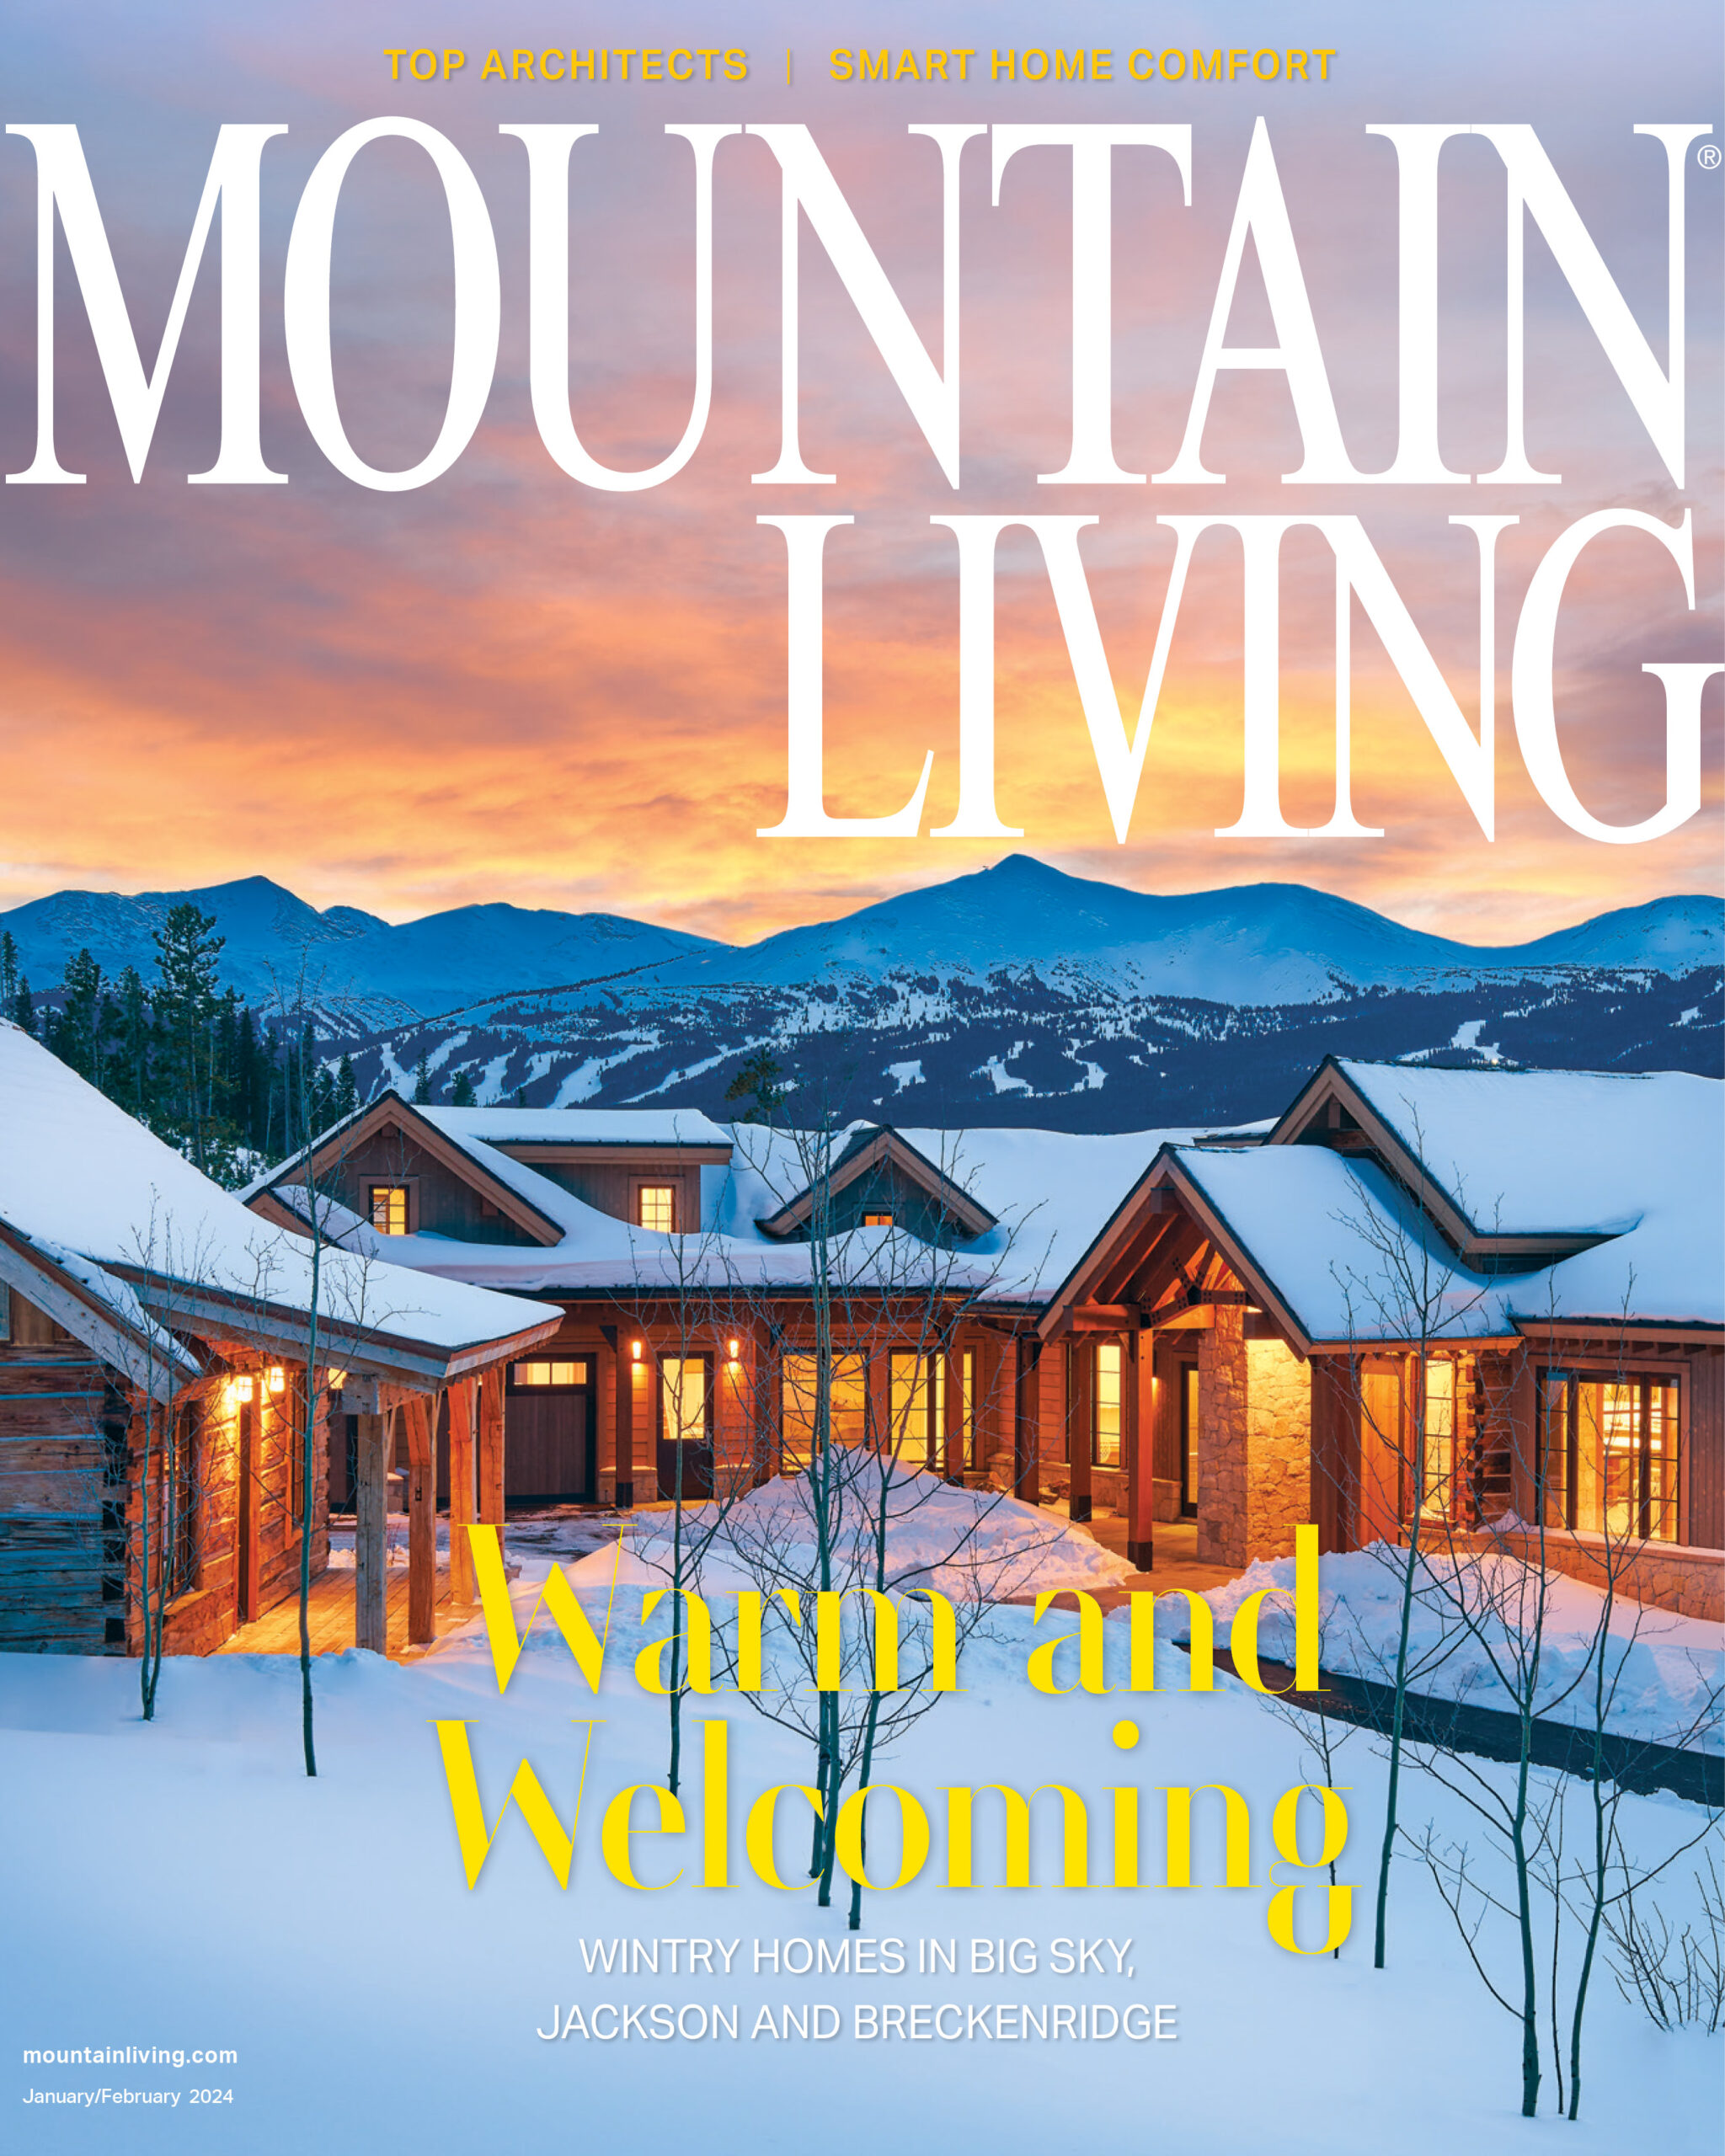 Mountain Living